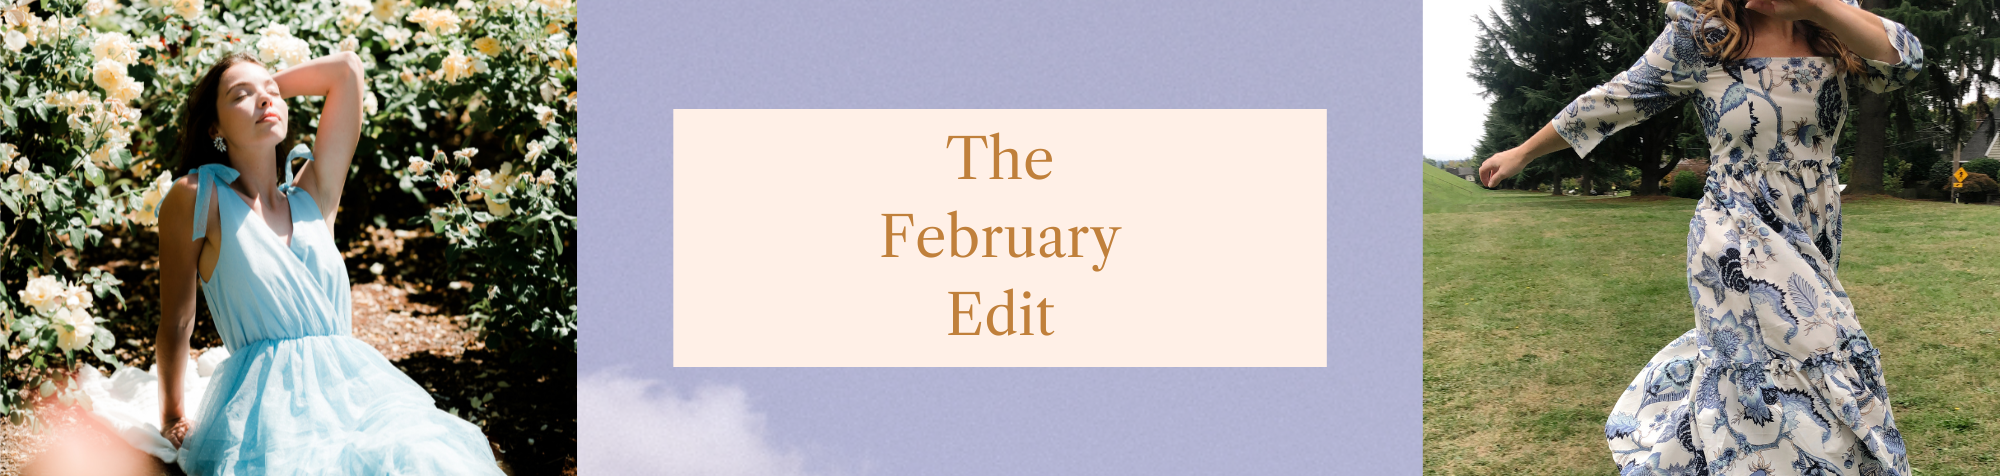 The February Edit